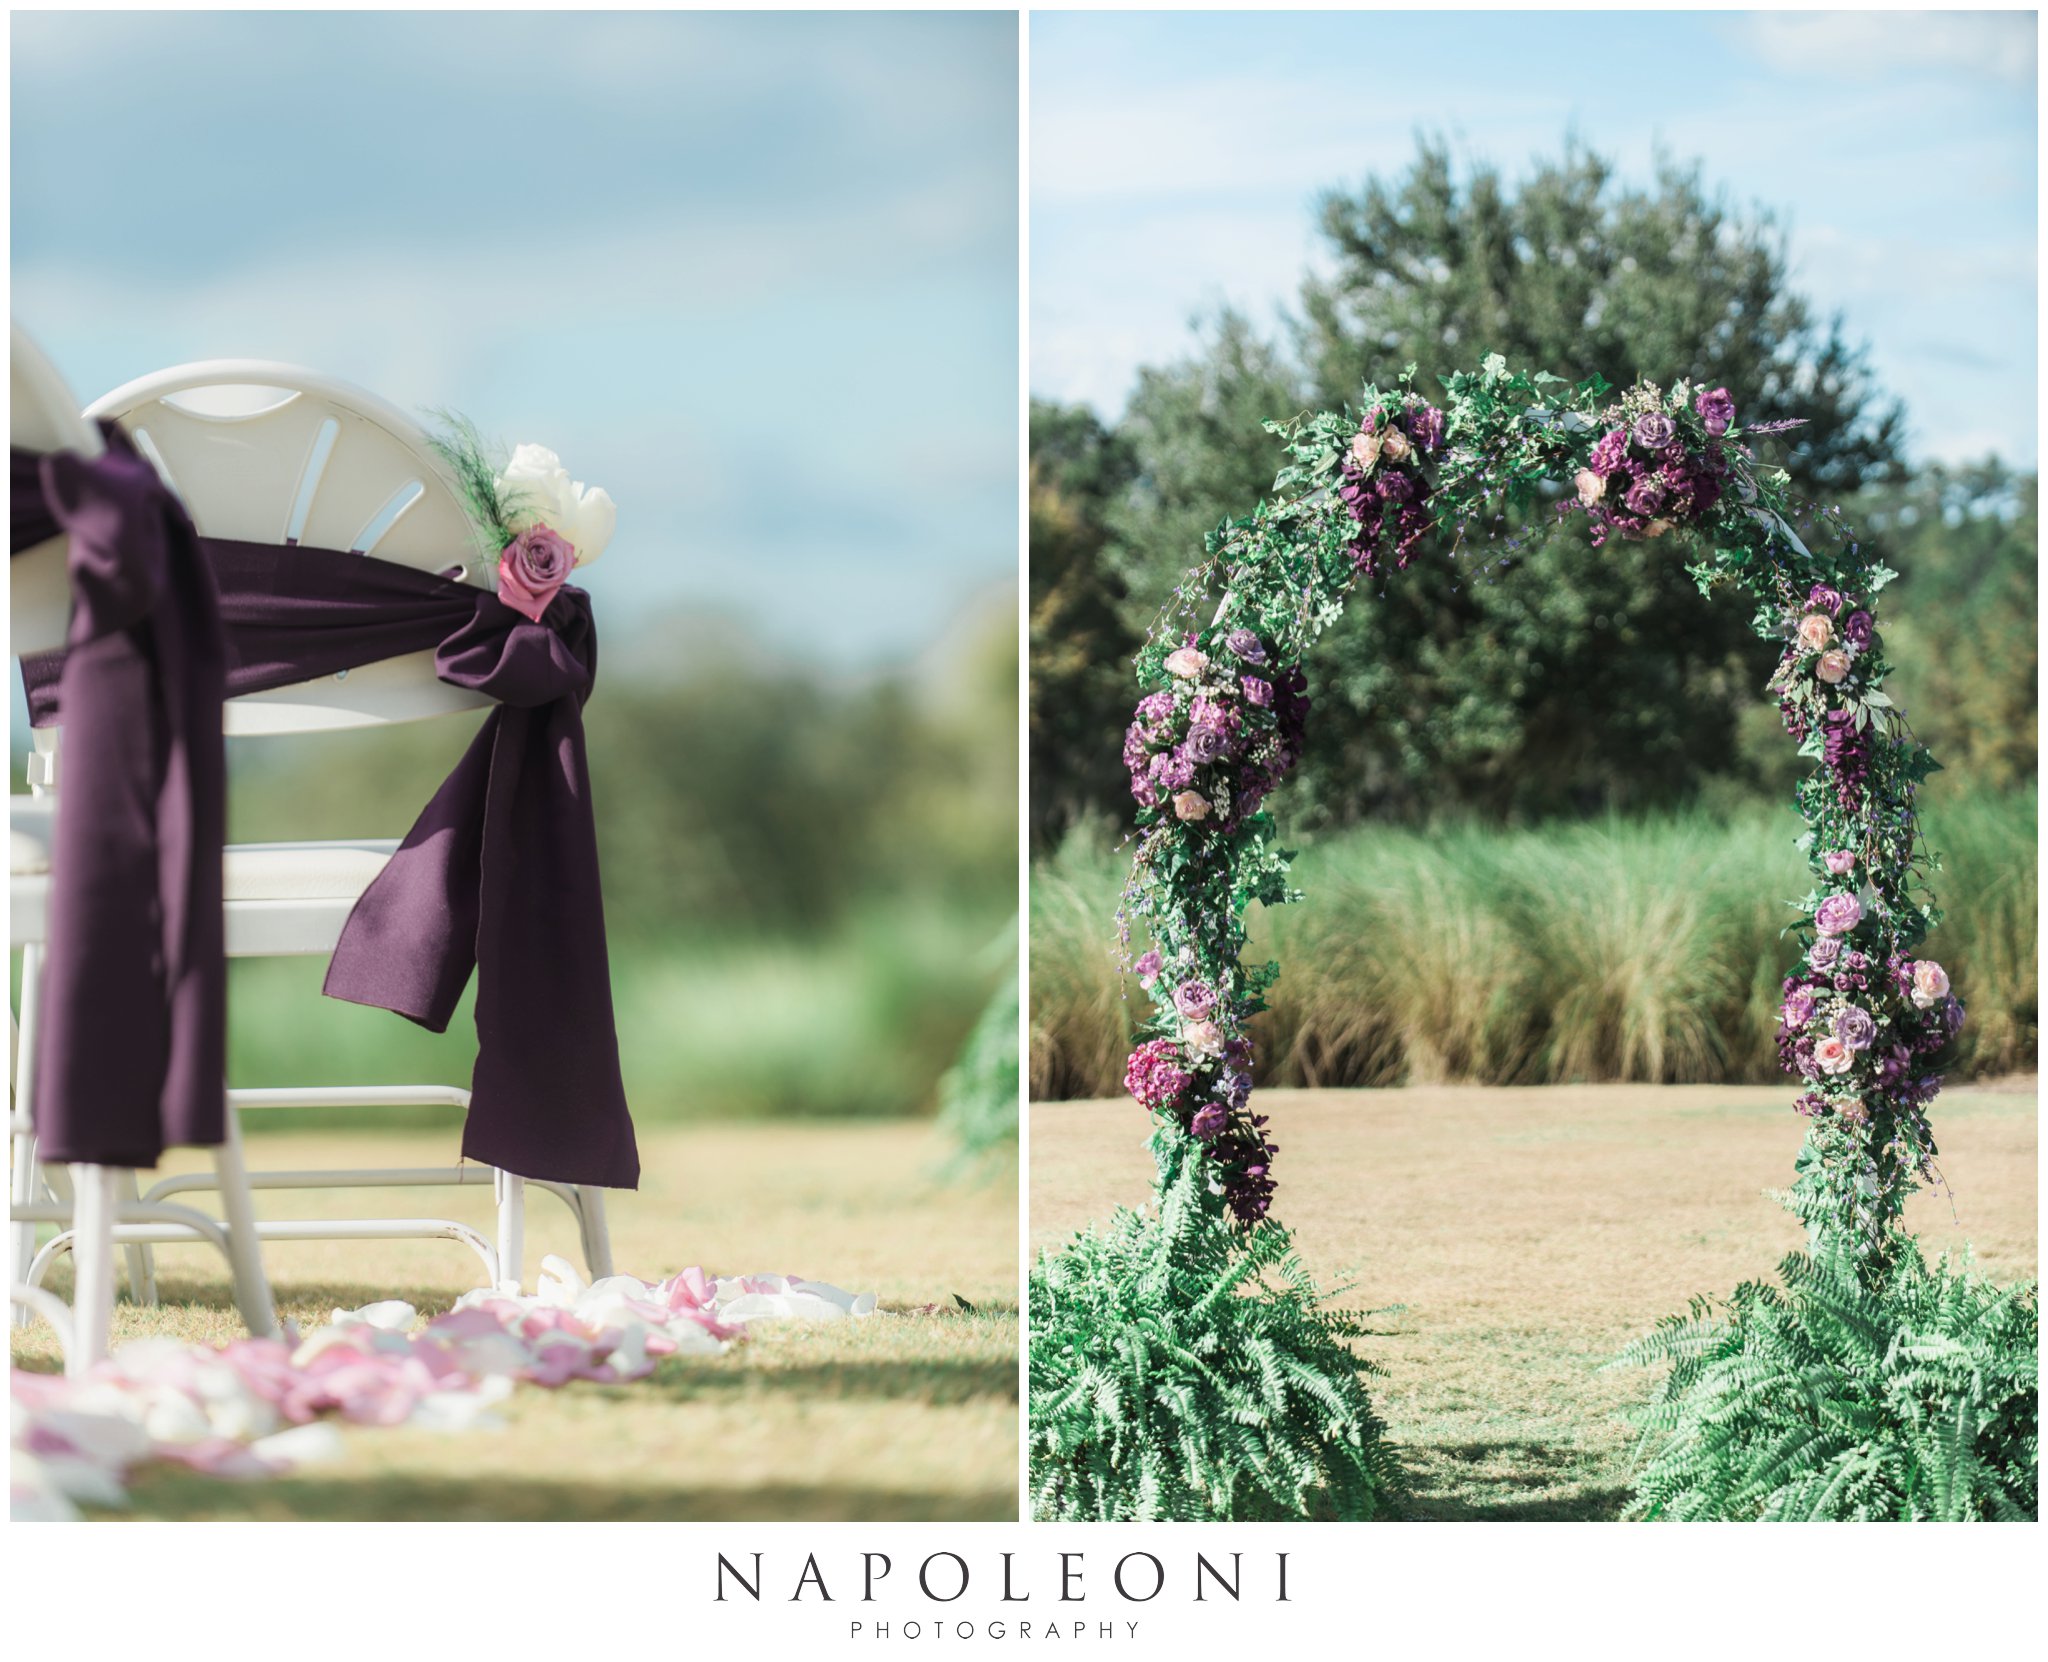 napoleoni-photography_0425a